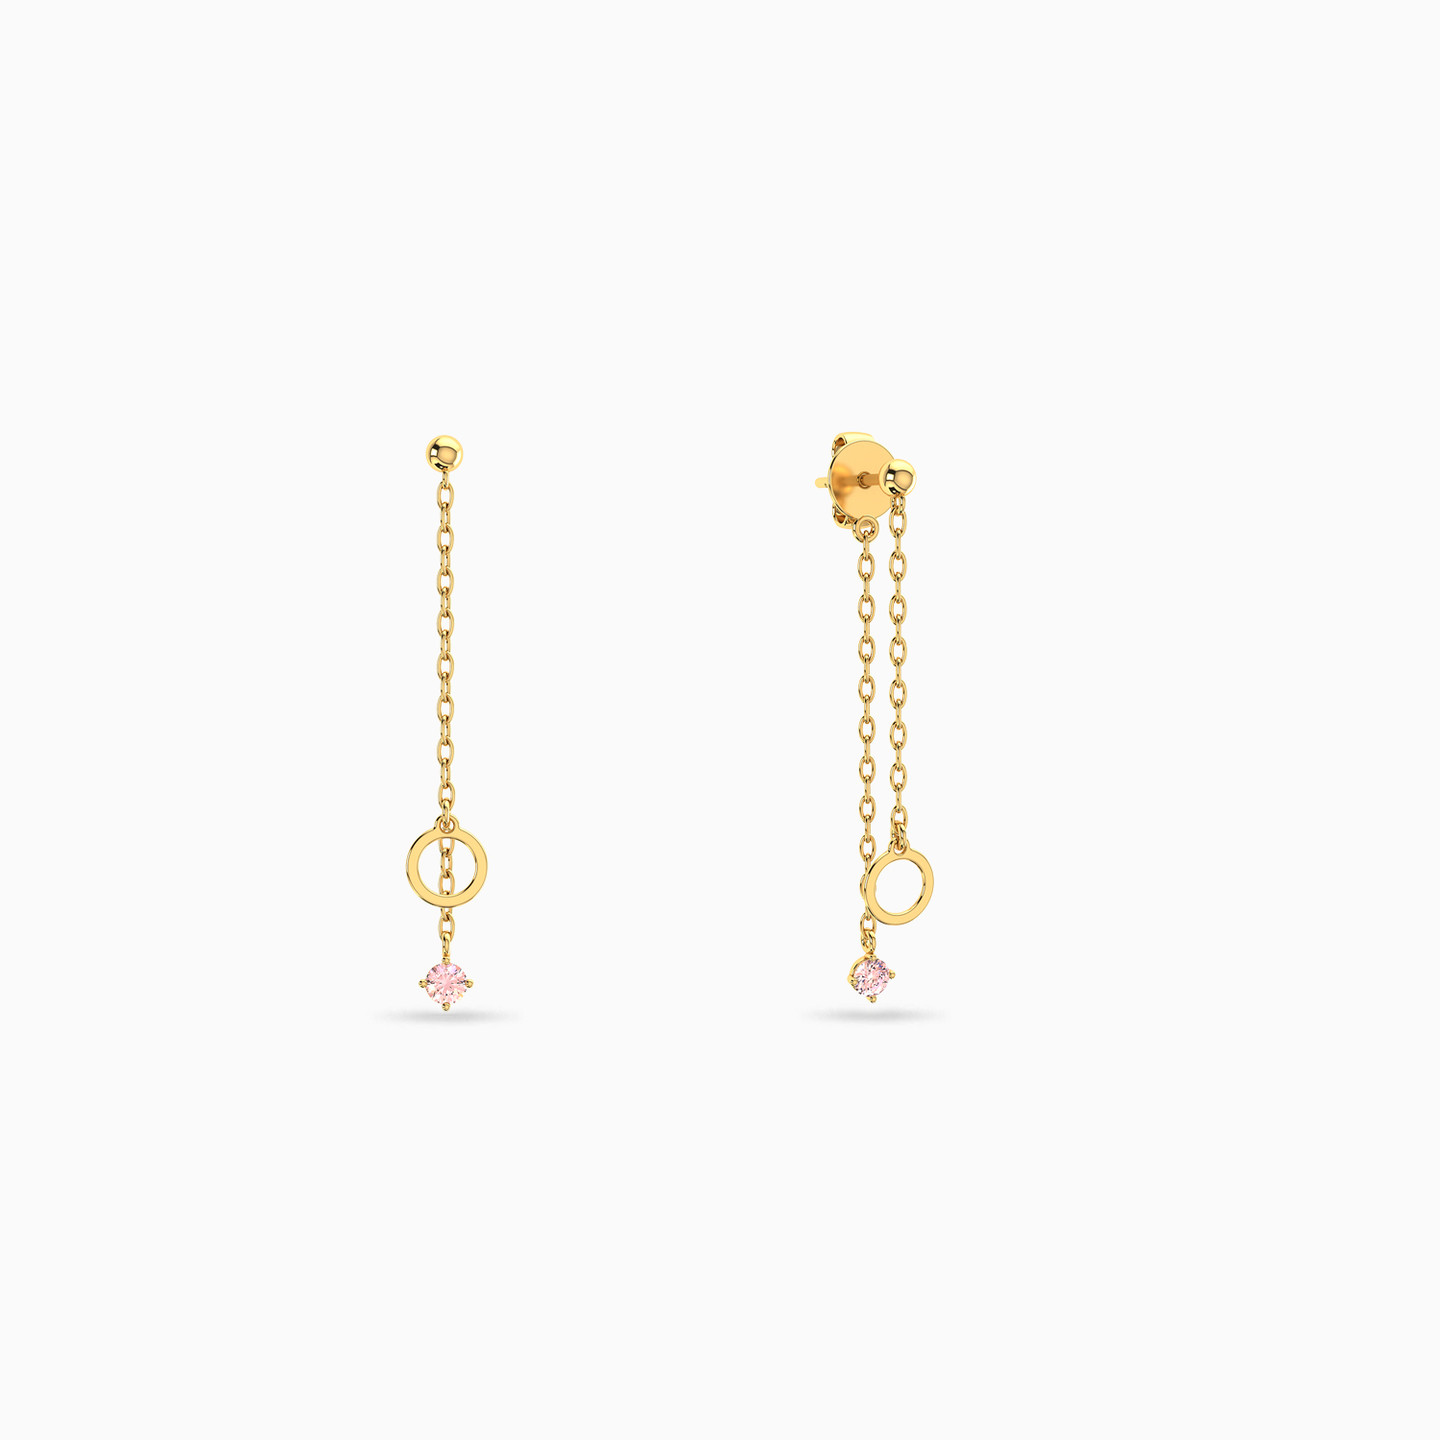 14K Gold Colored Stones Drop Earrings - 2